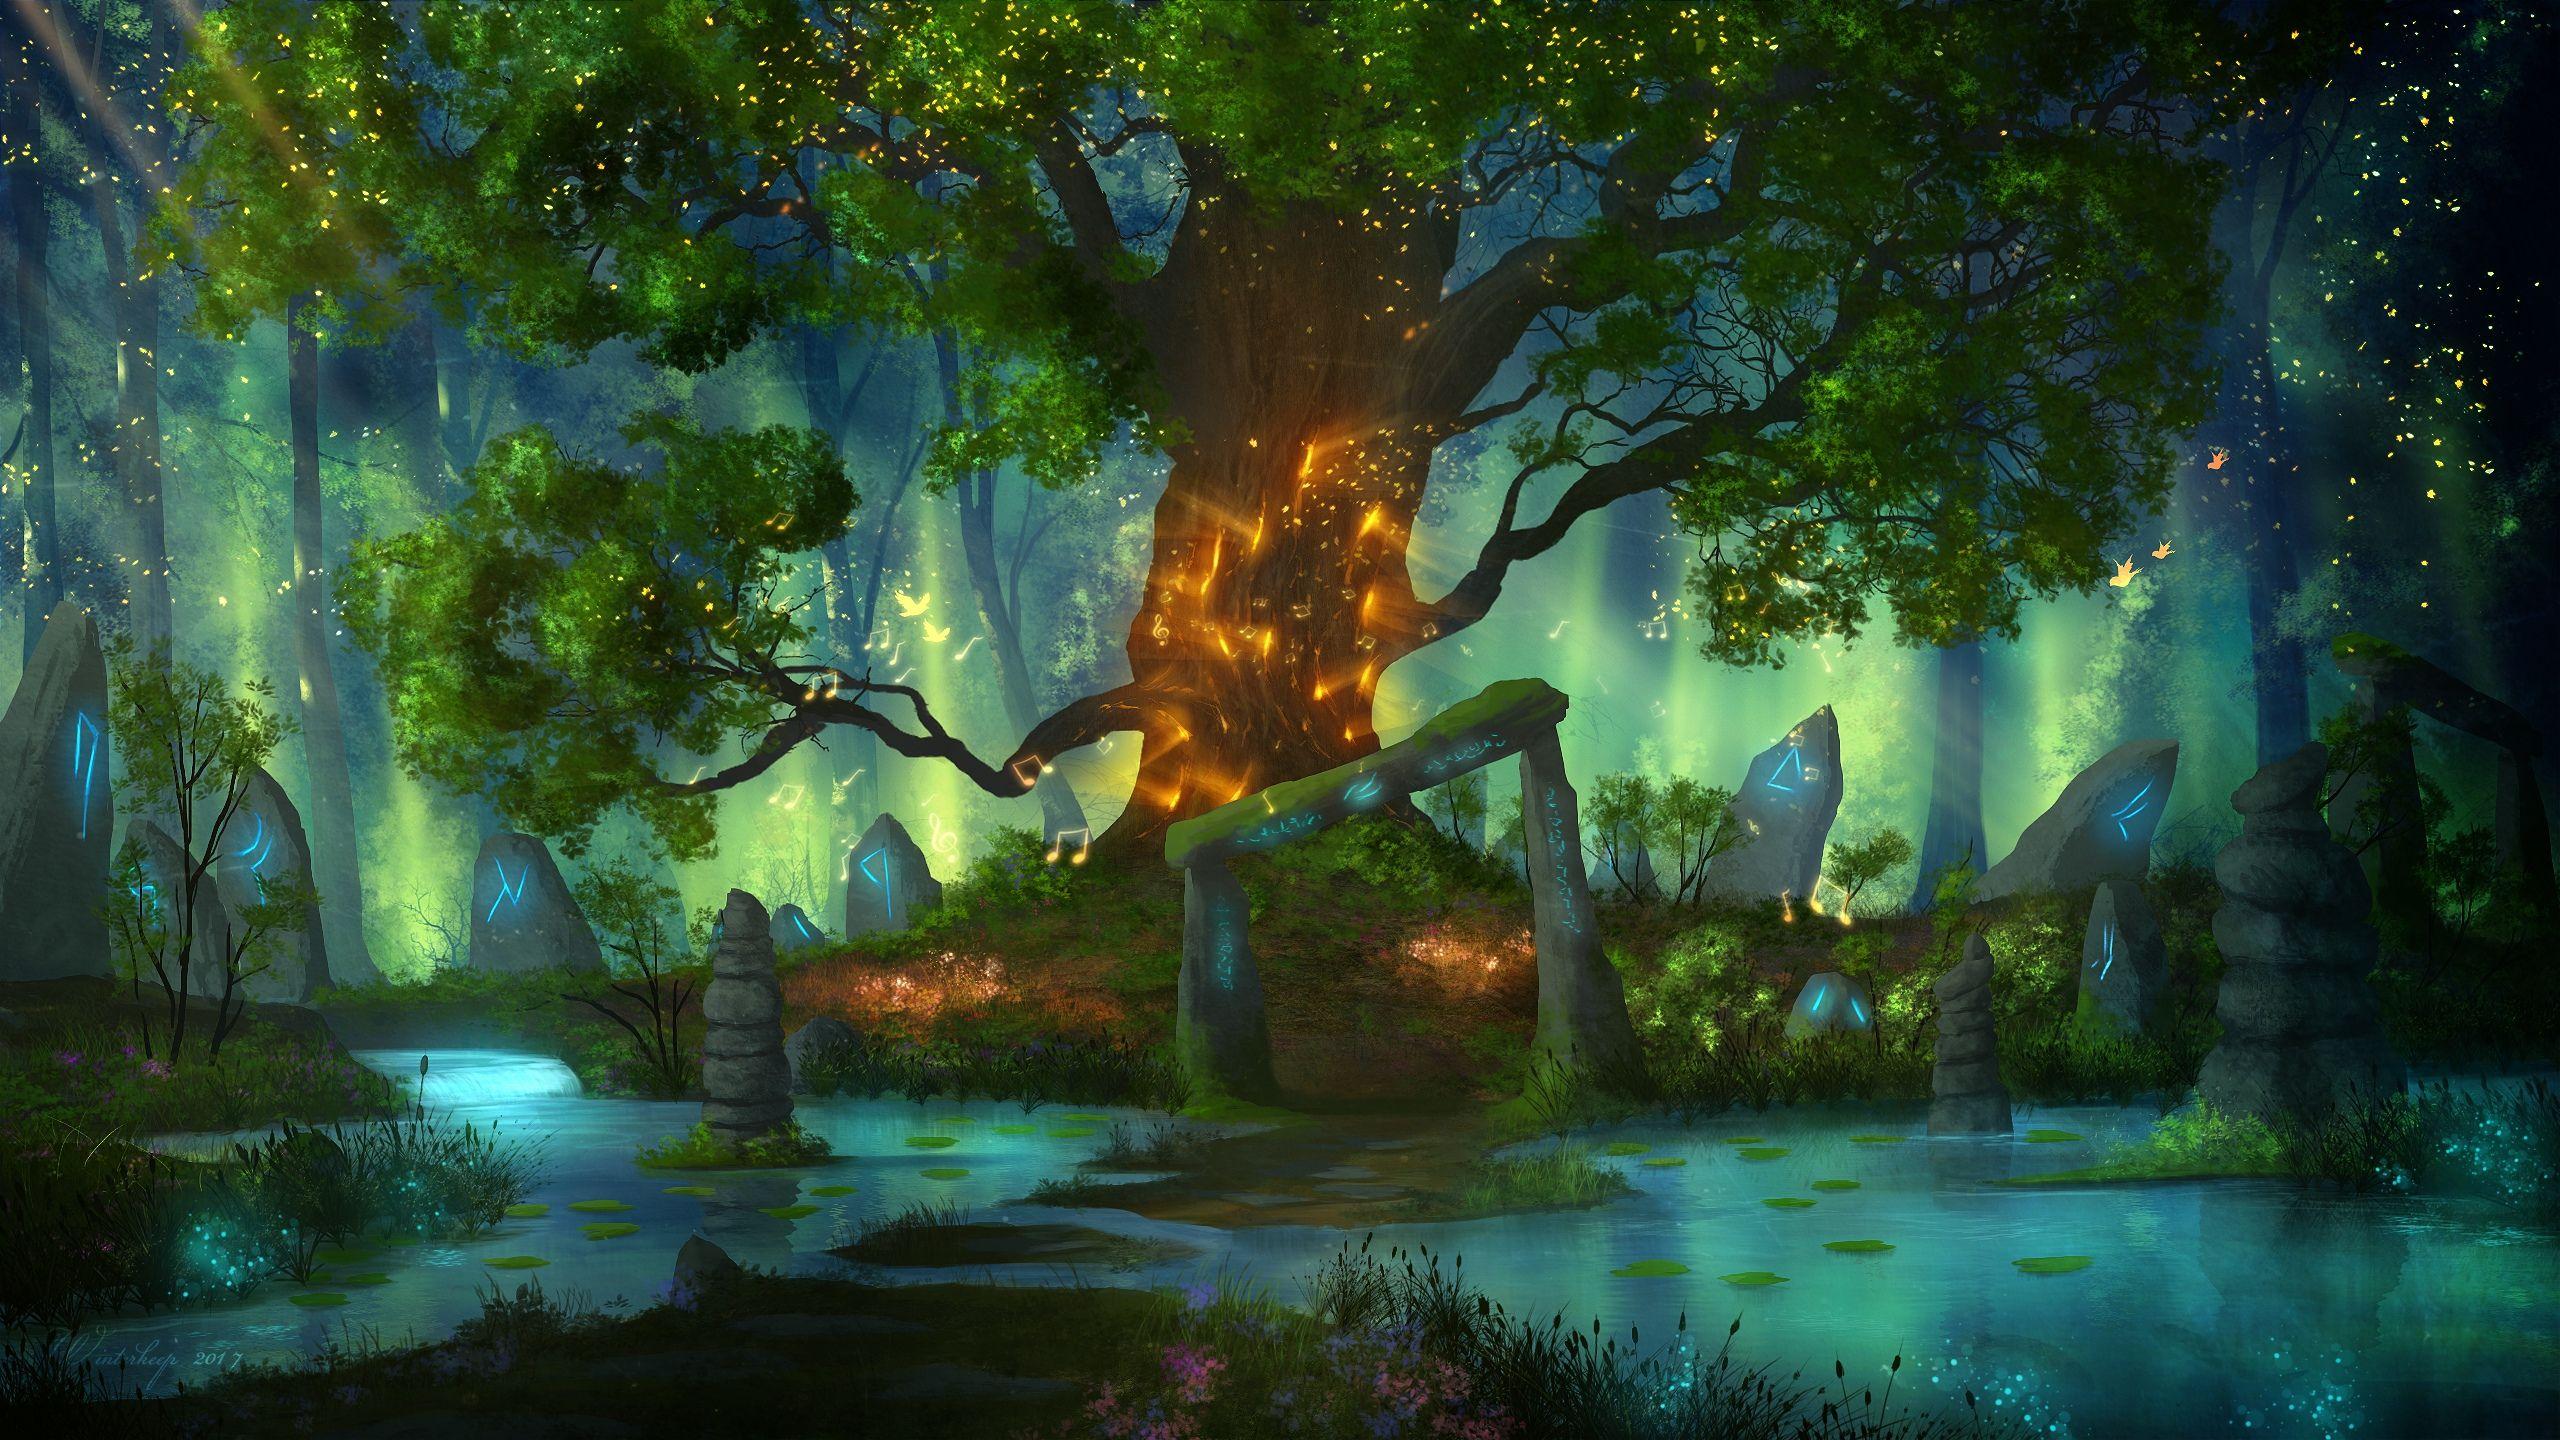 Garden of Eden Image Free Download 2560x1440